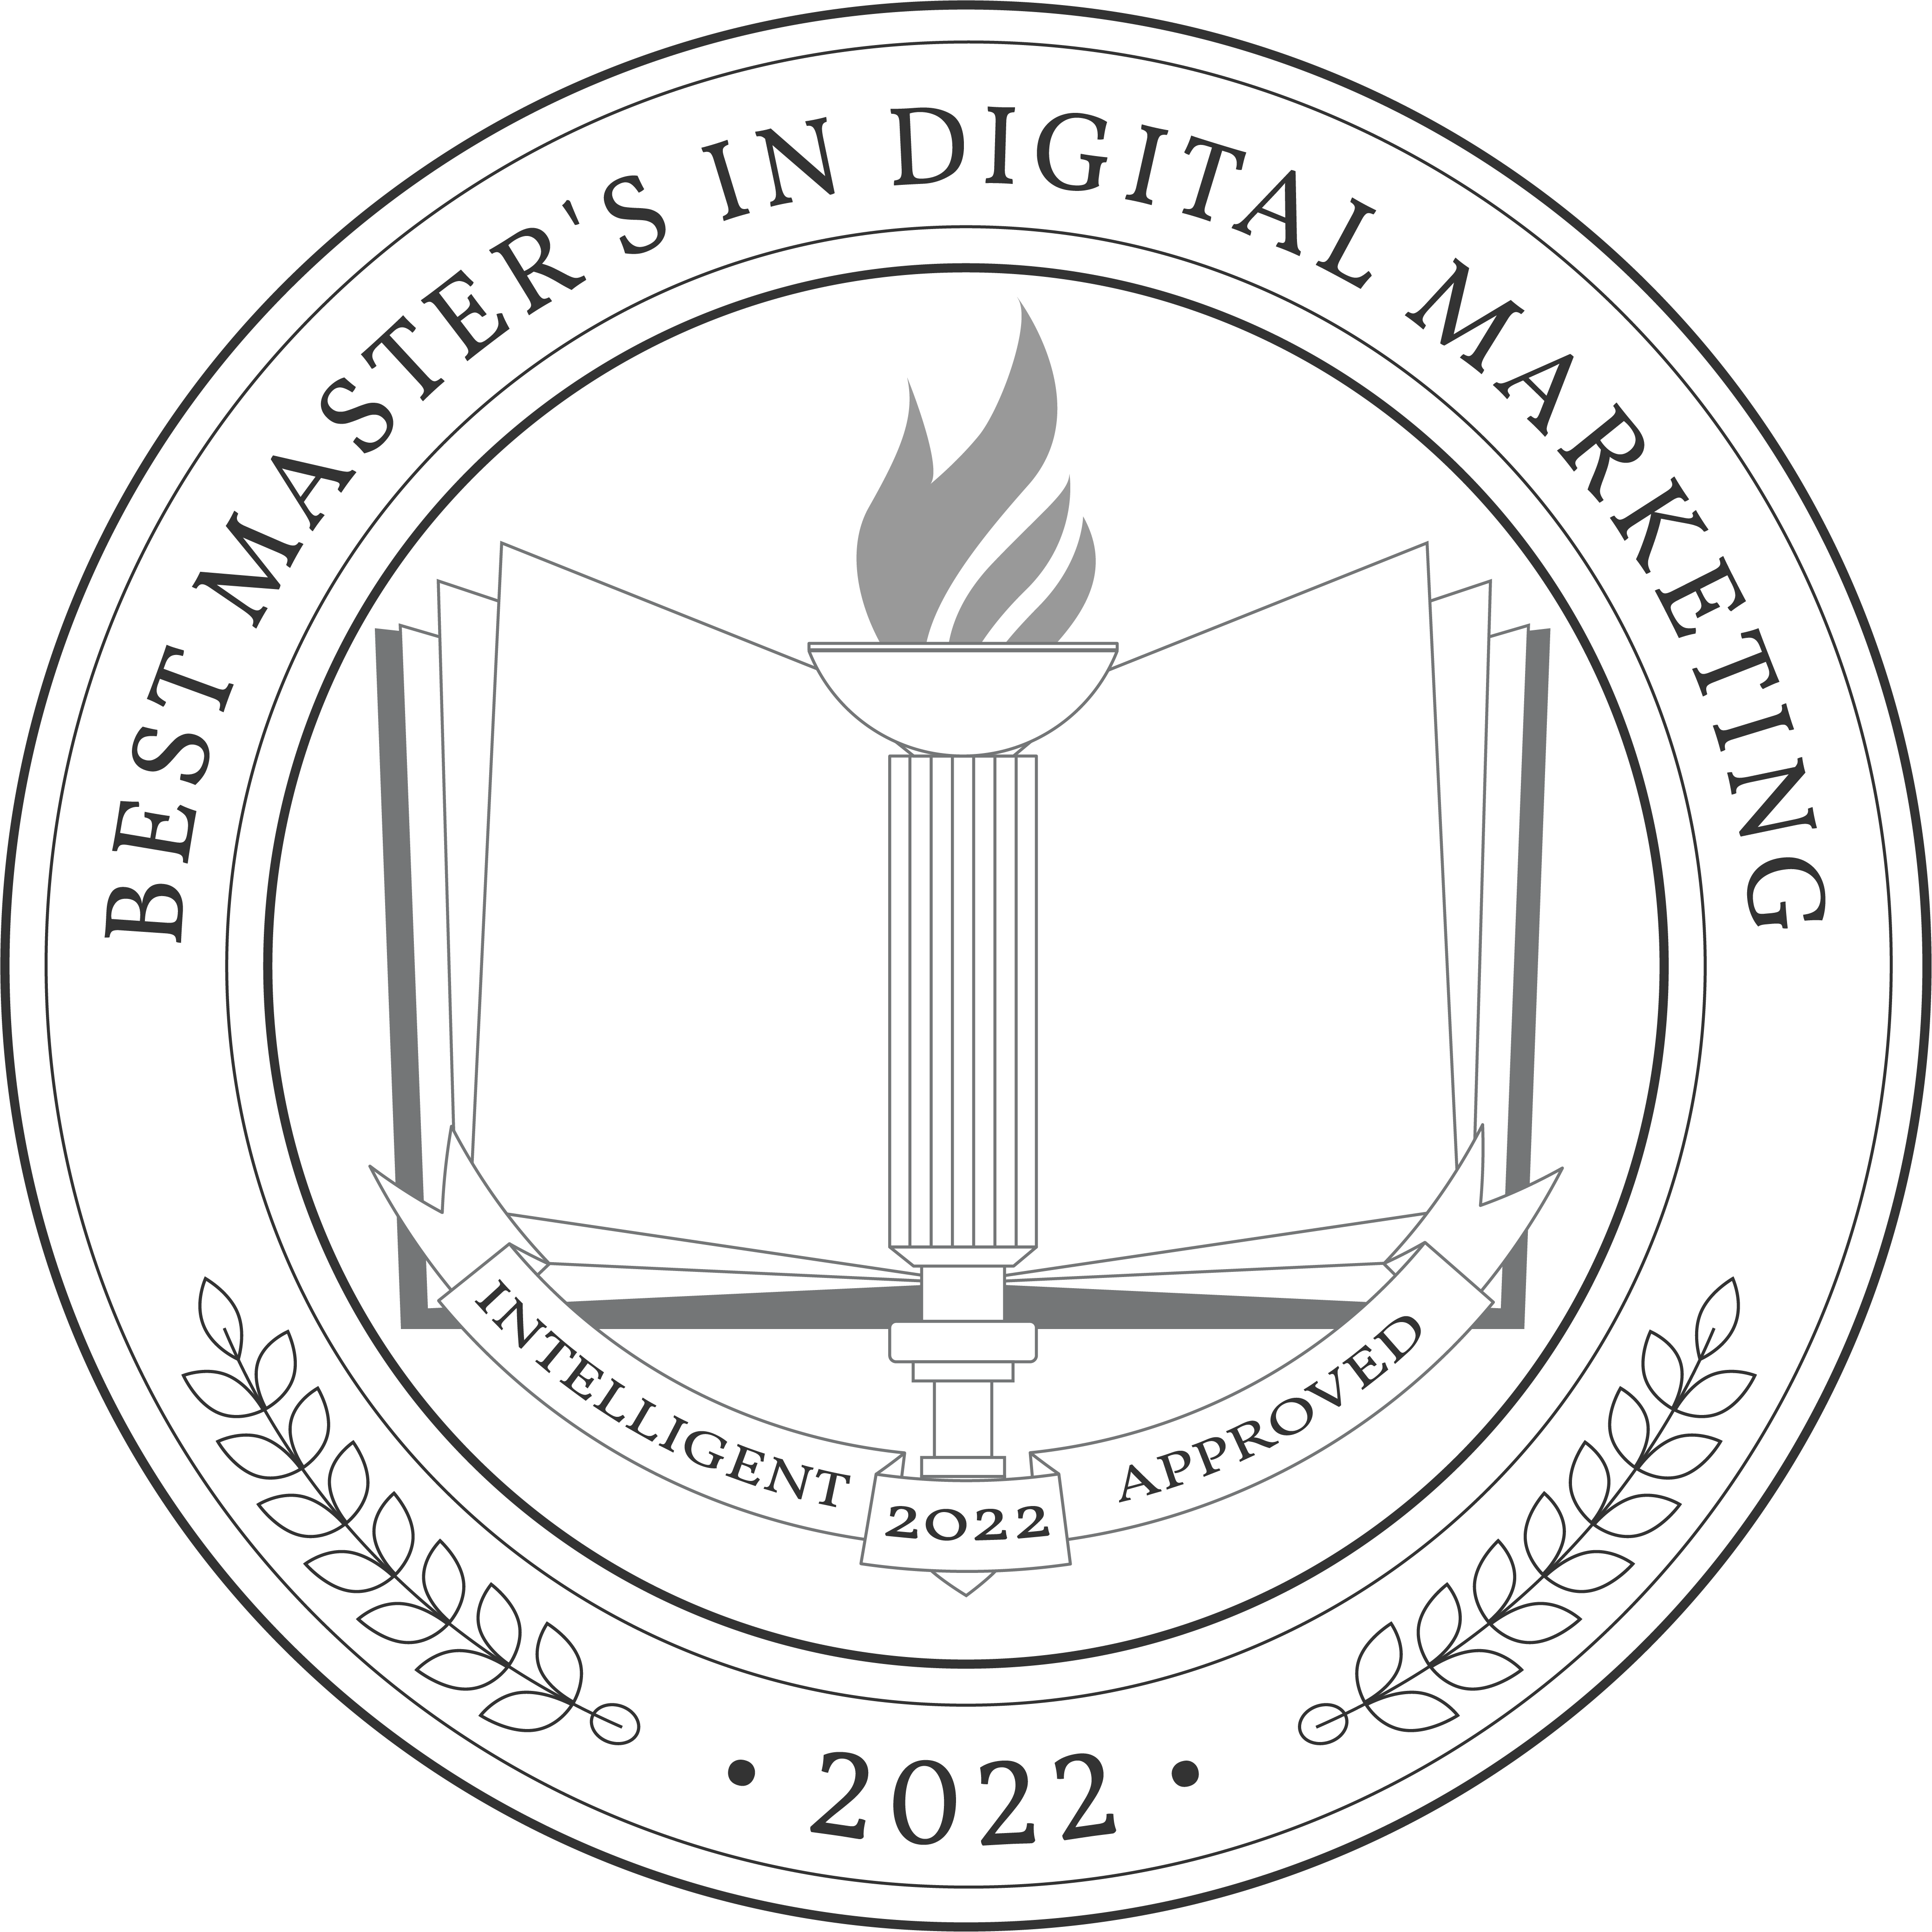 Top Online Master's in Digital Marketing Degree Programs of 2022